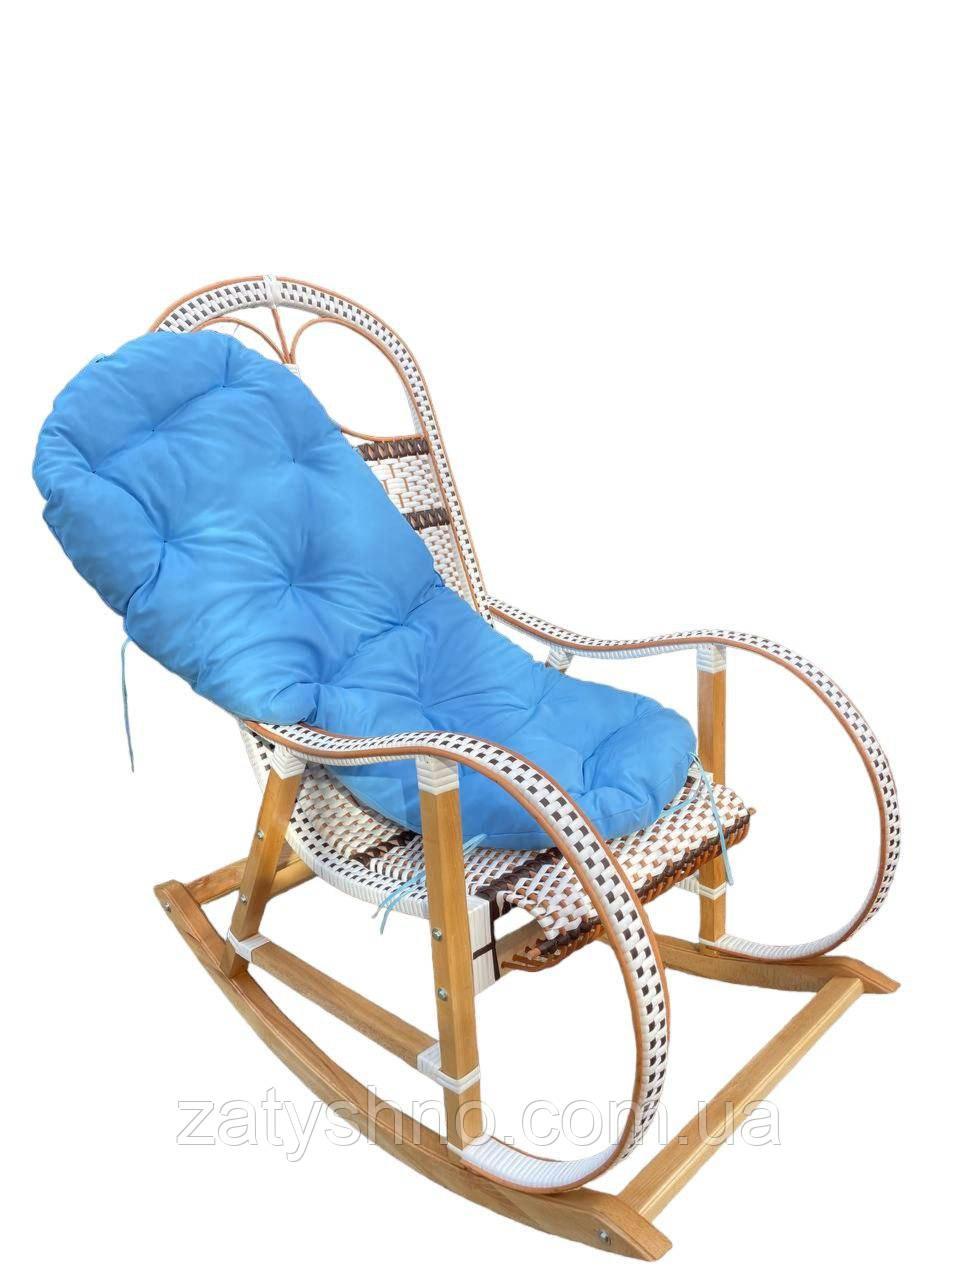 Крісло-гойдалка плетене з лози з накидкою